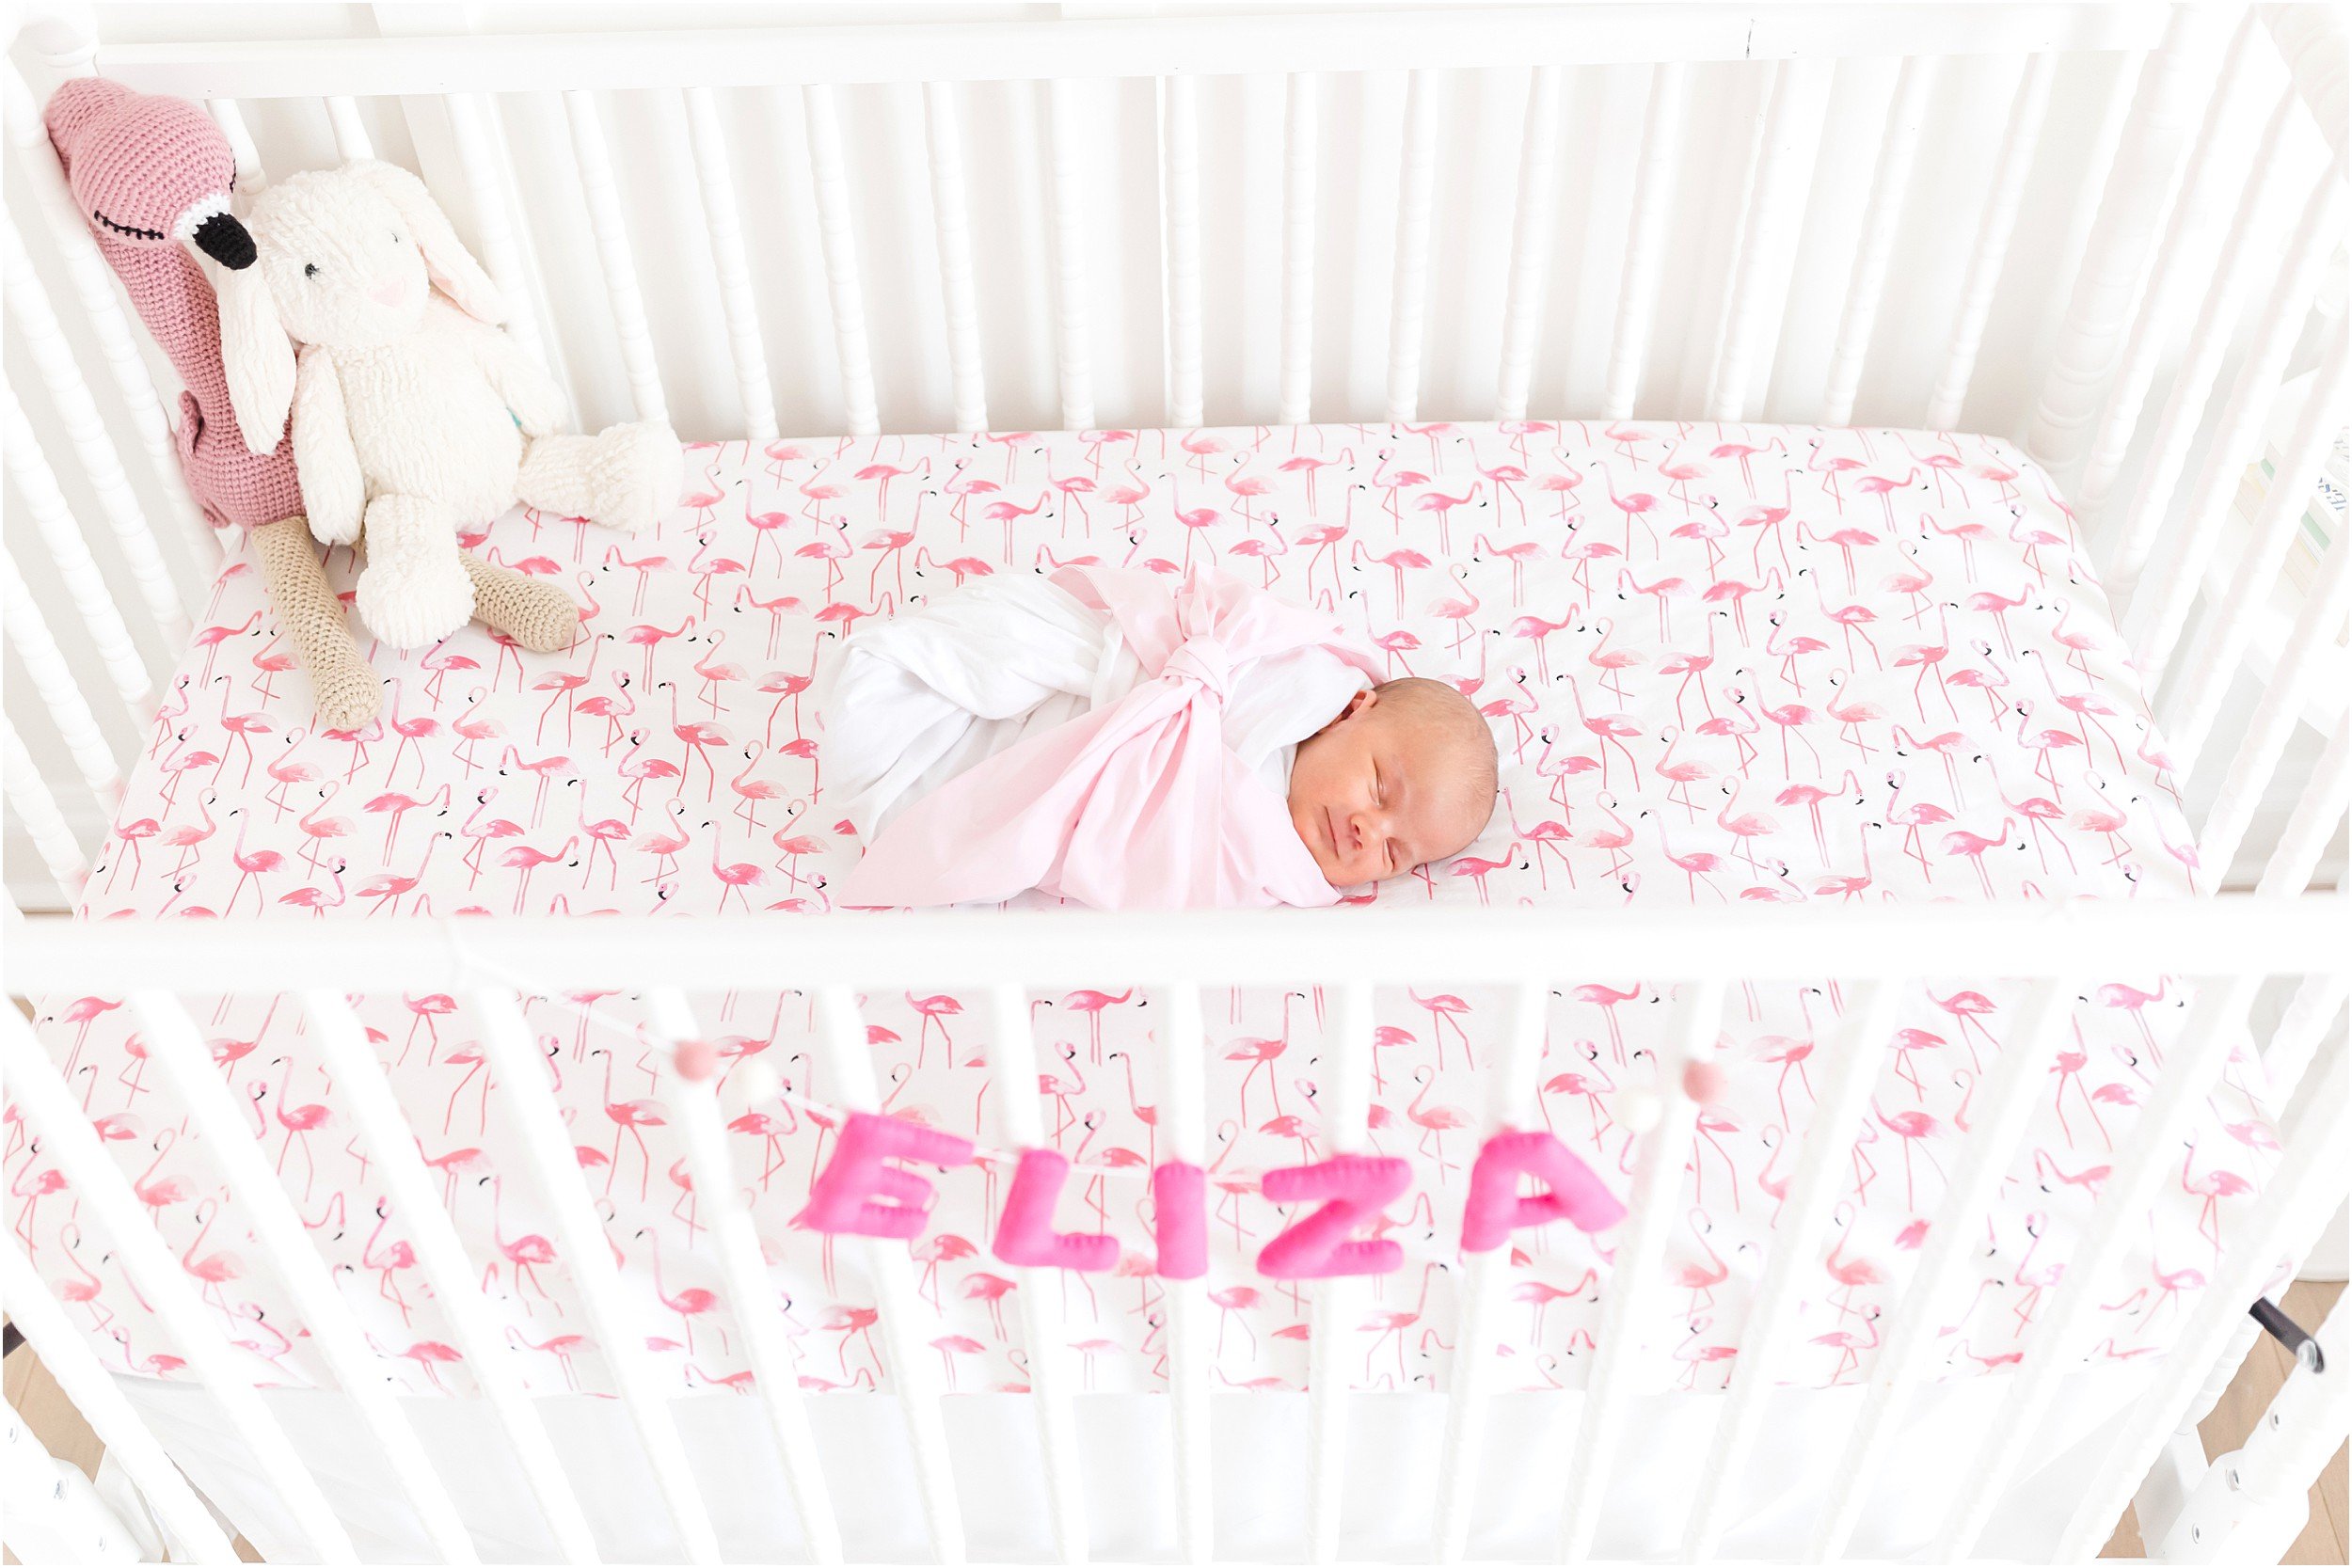 Webster Newborn 2022-142_northcarolina-newborn-photography-annagracephotography-maryland-photographer.jpg